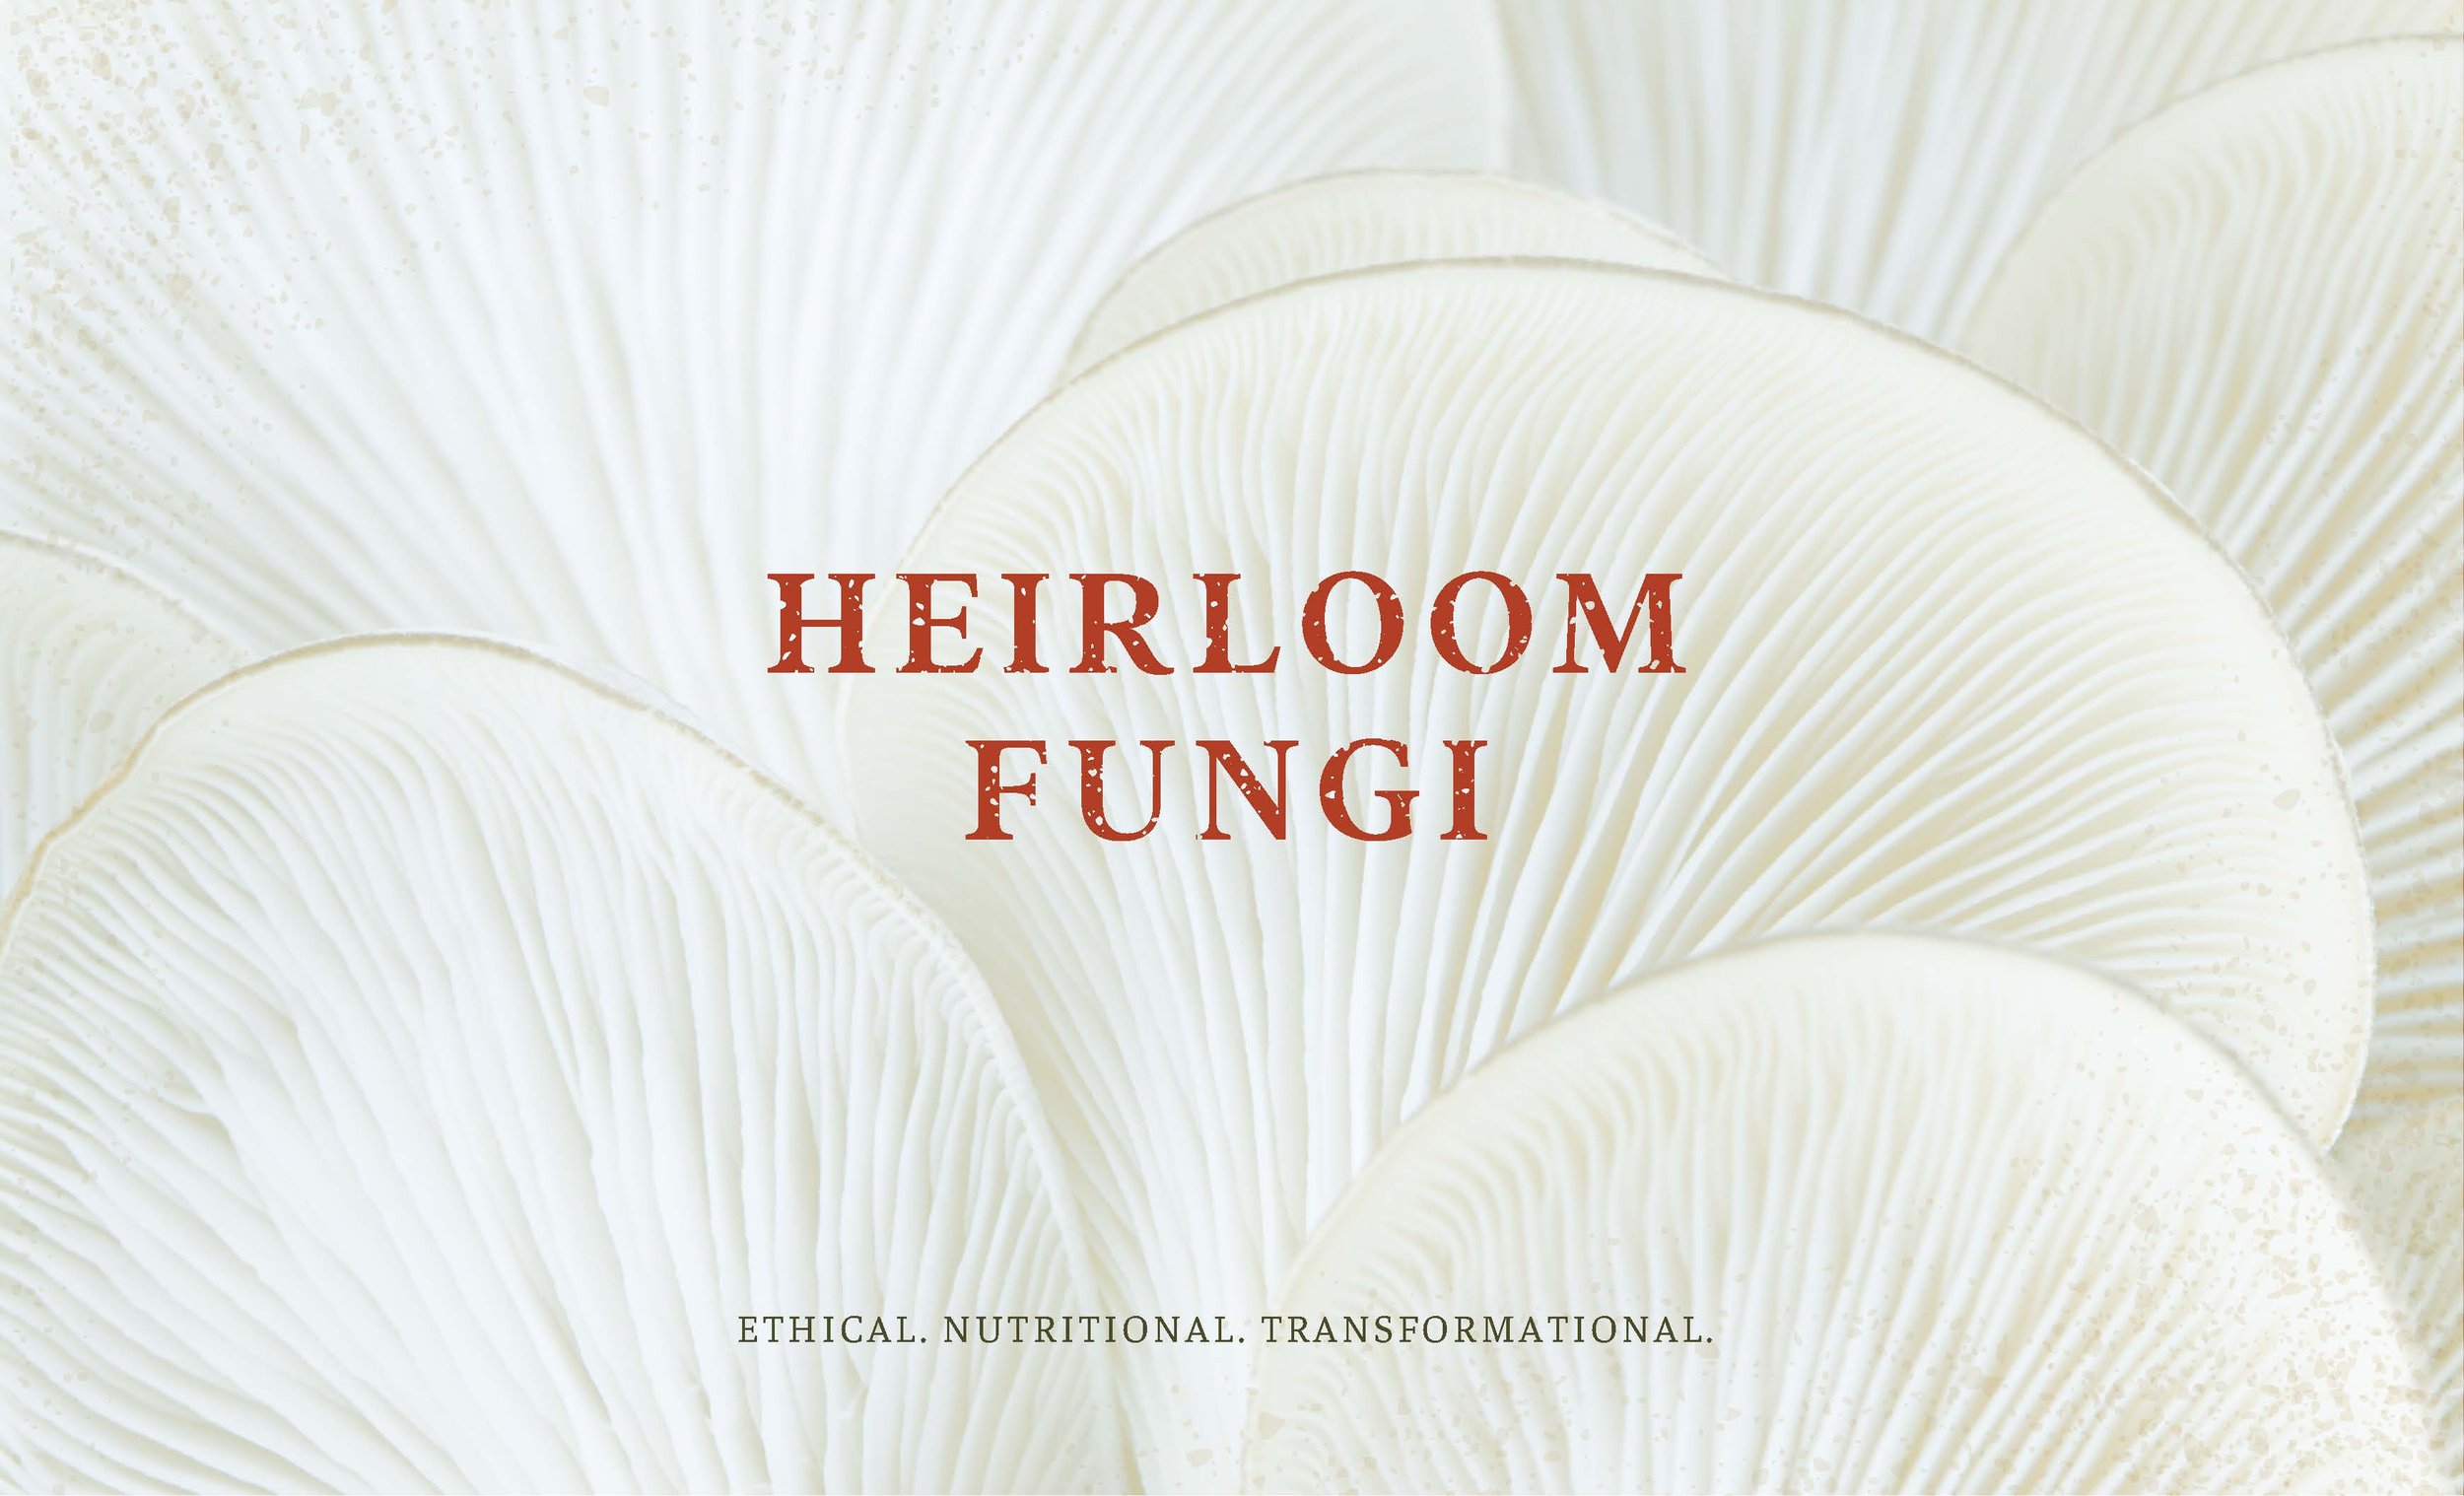  Heirloom Fungi logo on background of white mushrooms. 